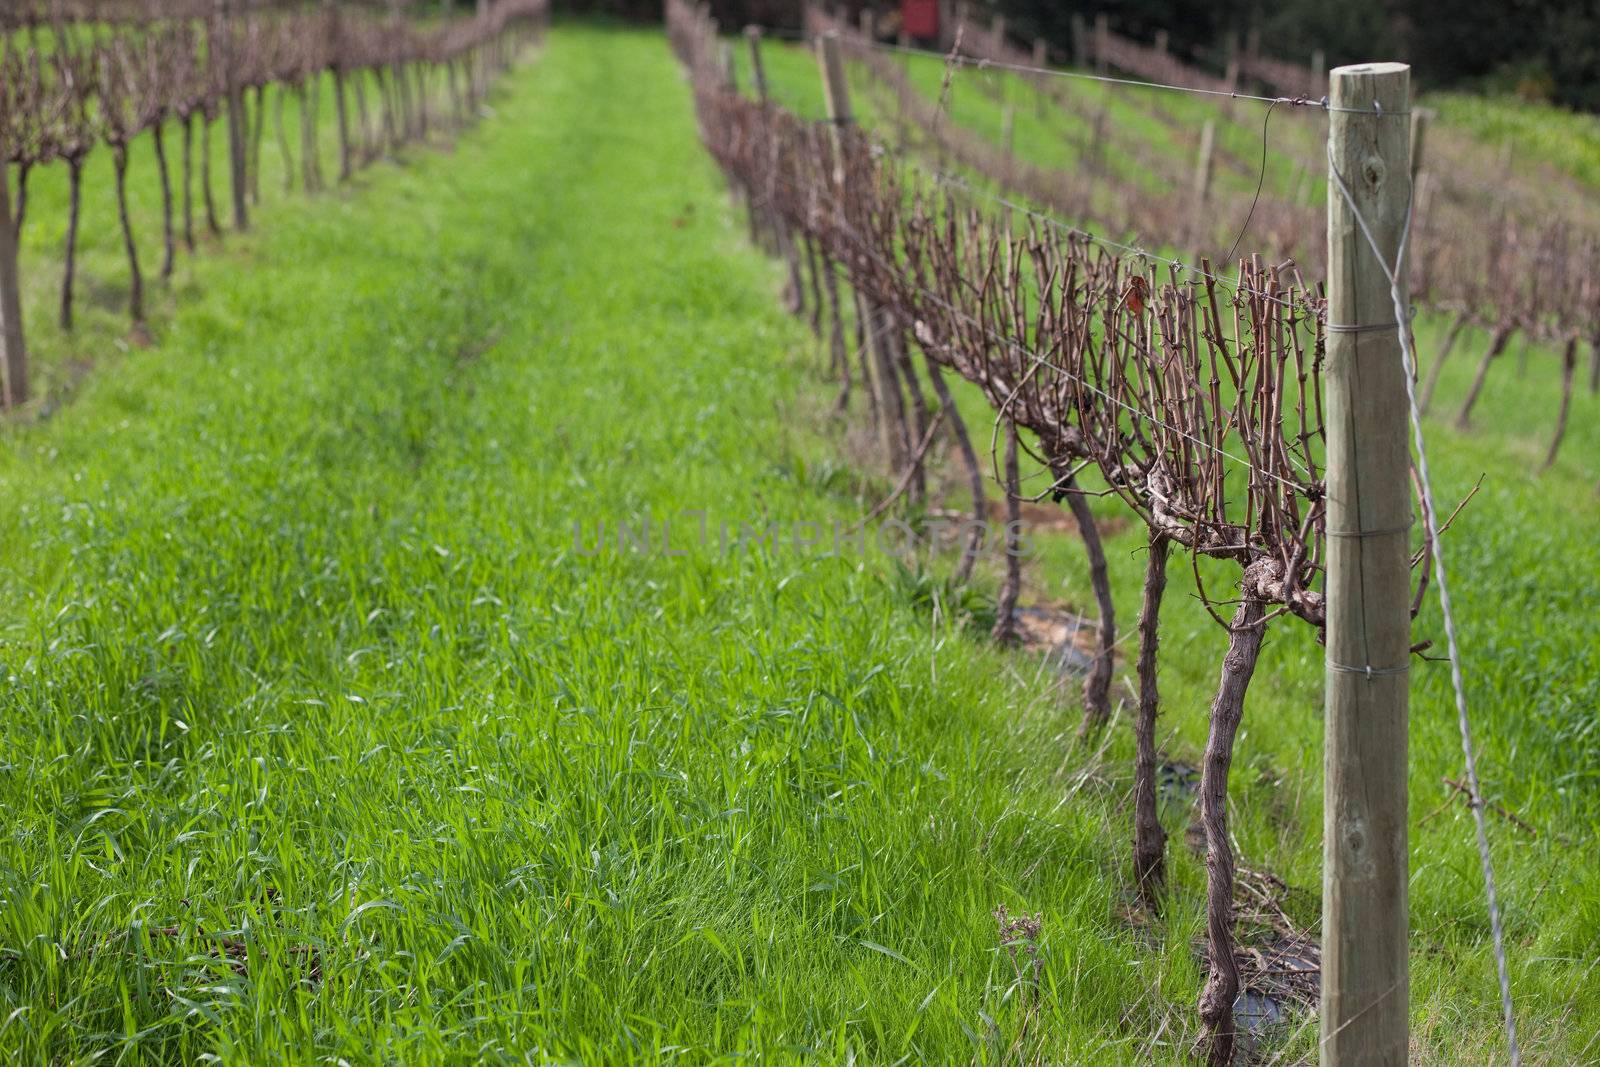 Empty grape rows in vineyard, Franschhoek, South Africa